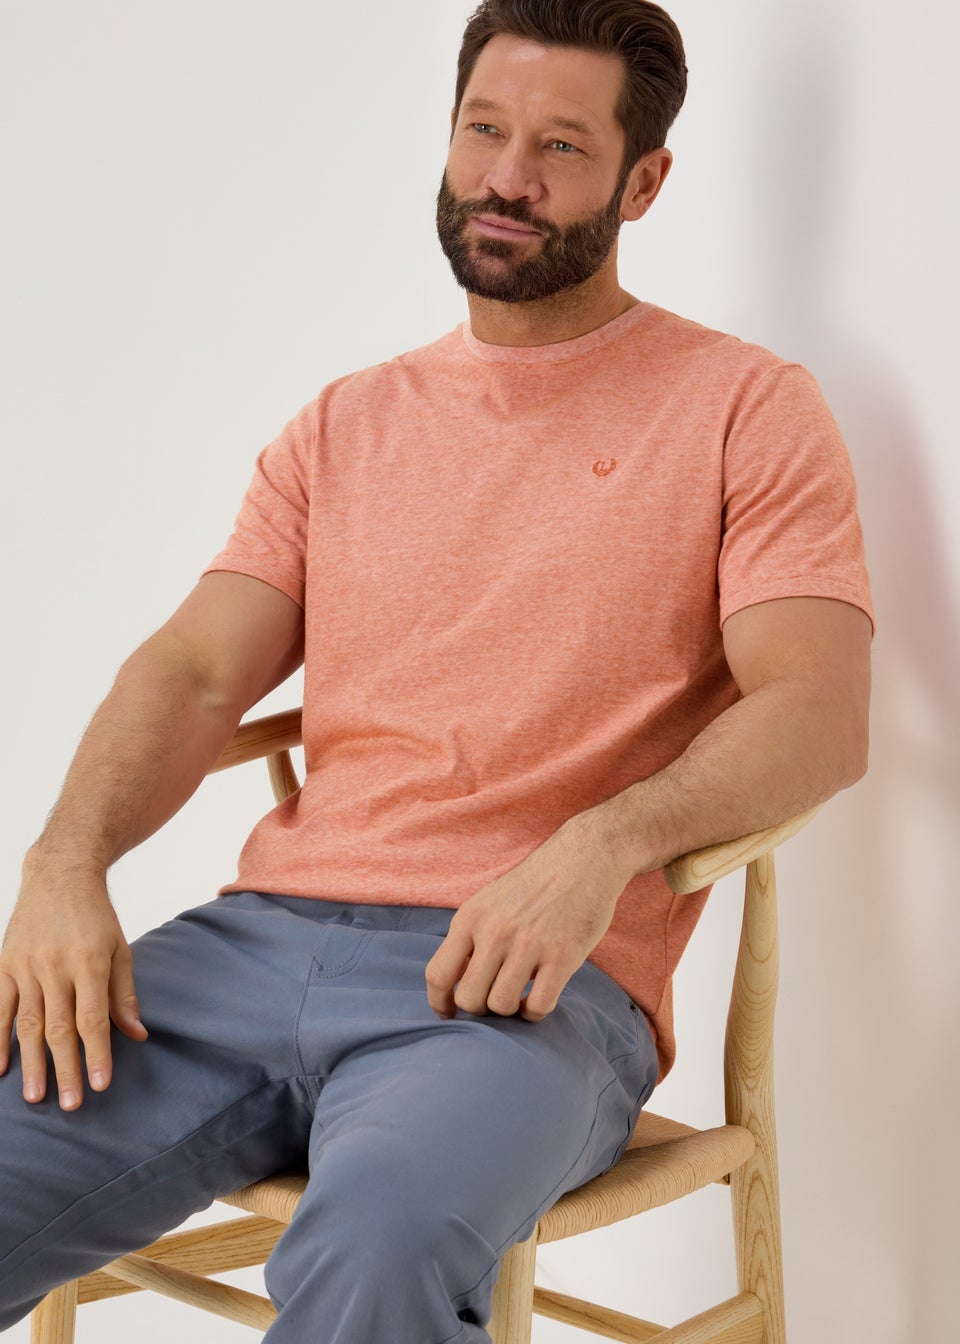 Lincoln Orange Feeder Stripe T-Shirt